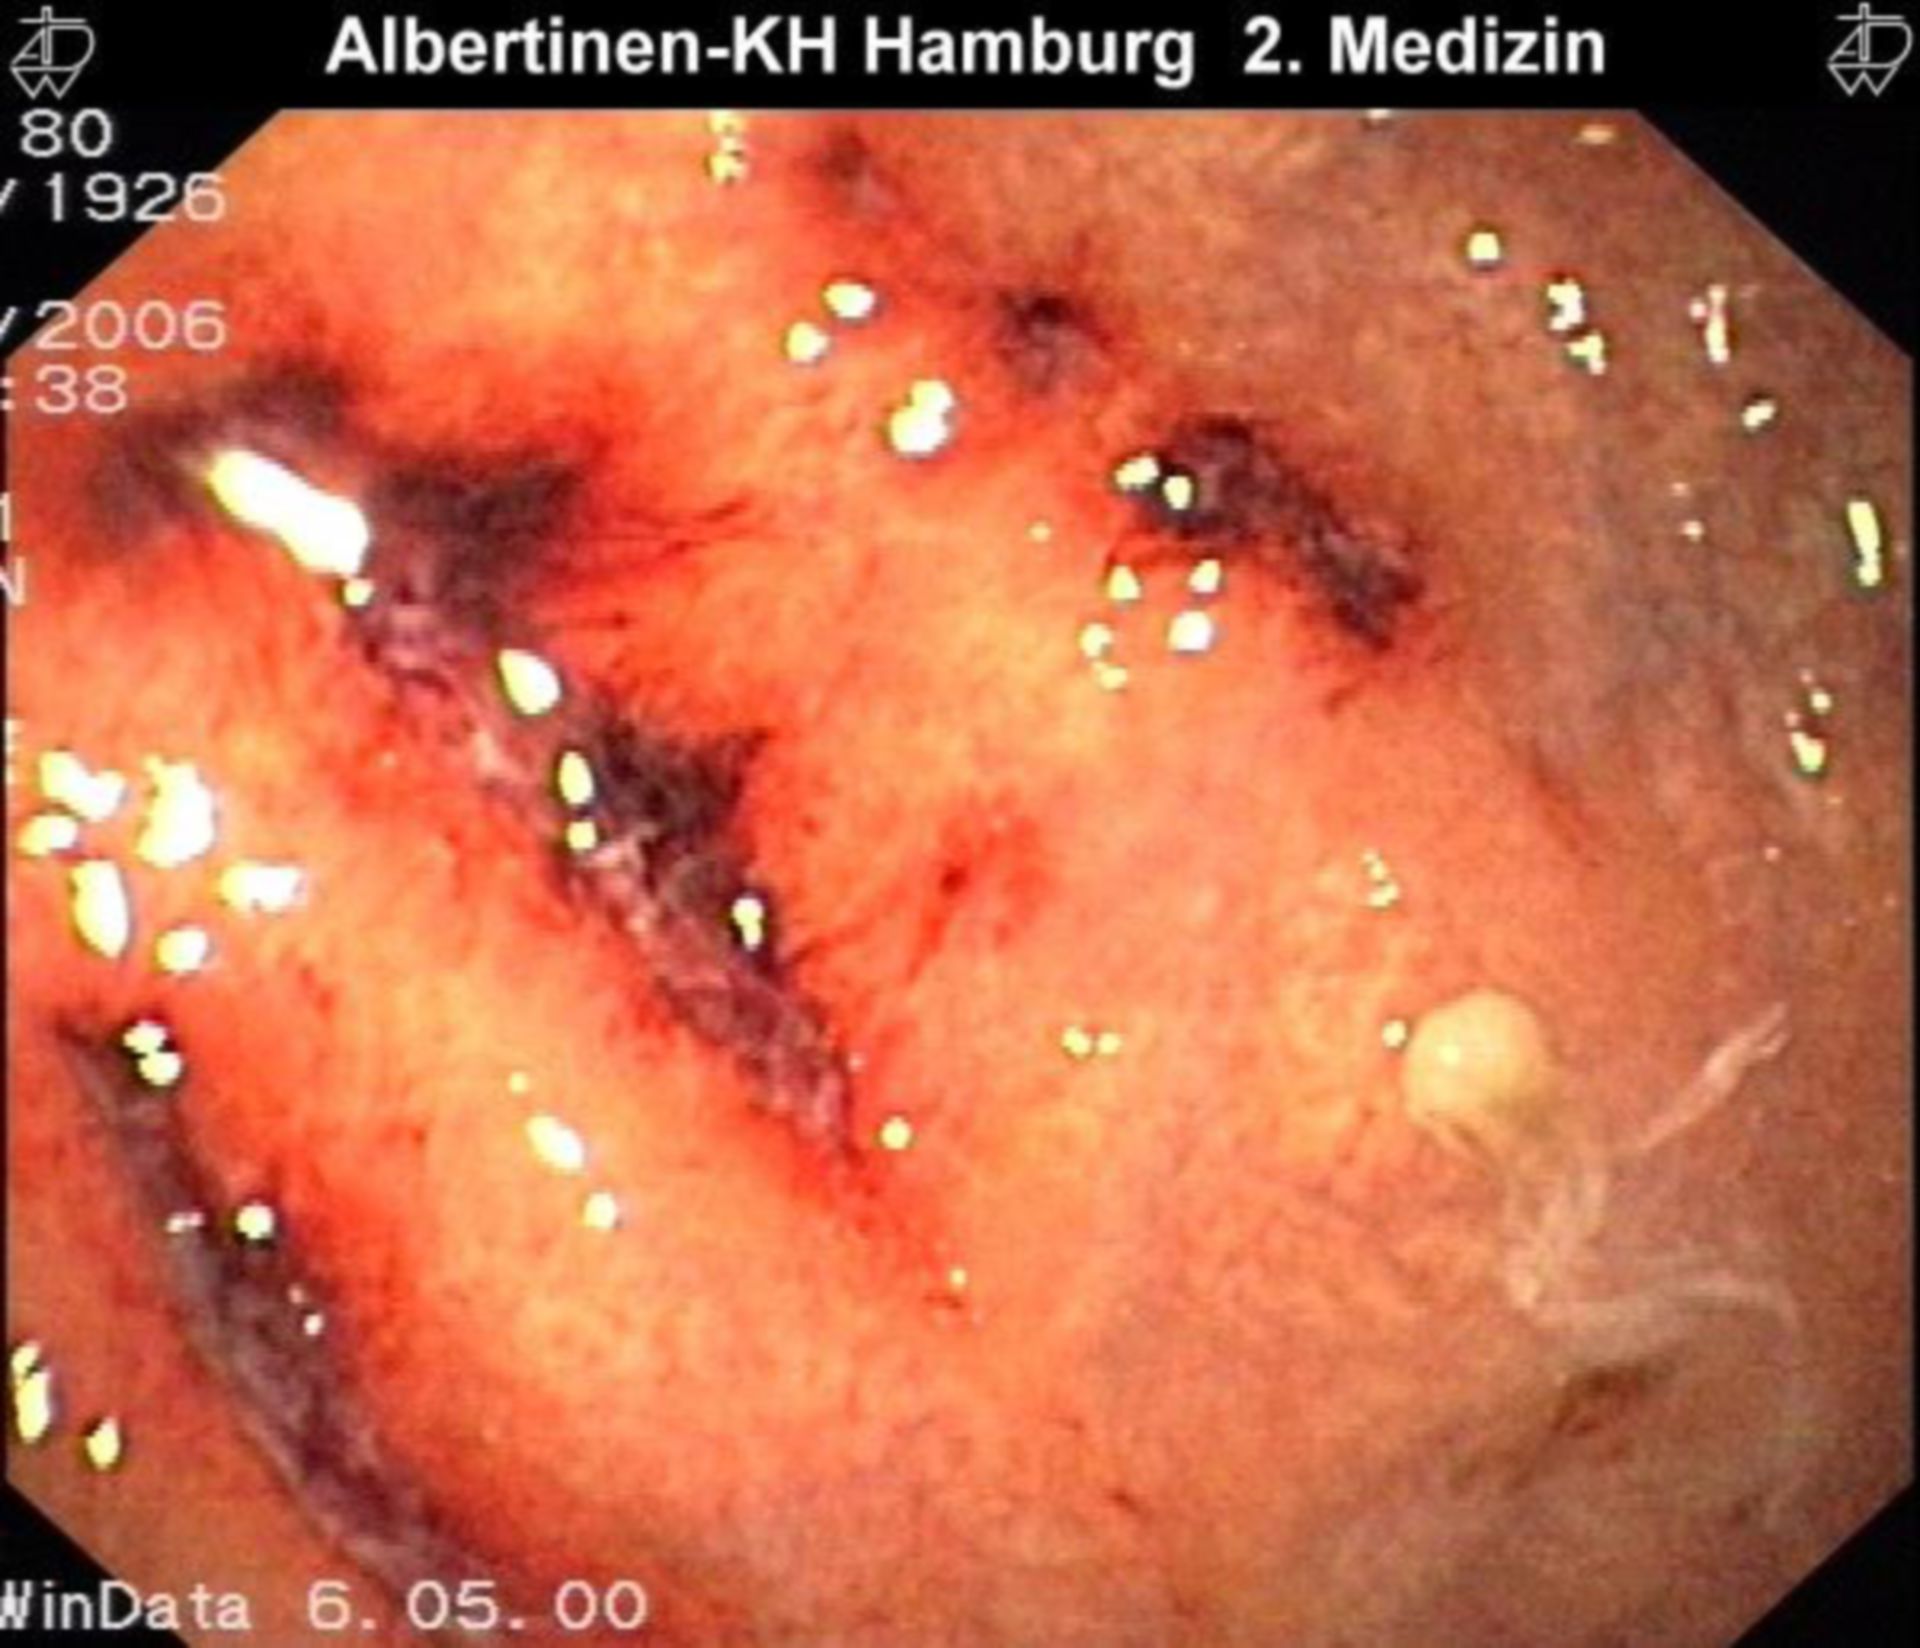 Hemorrhagic gastritis (3)